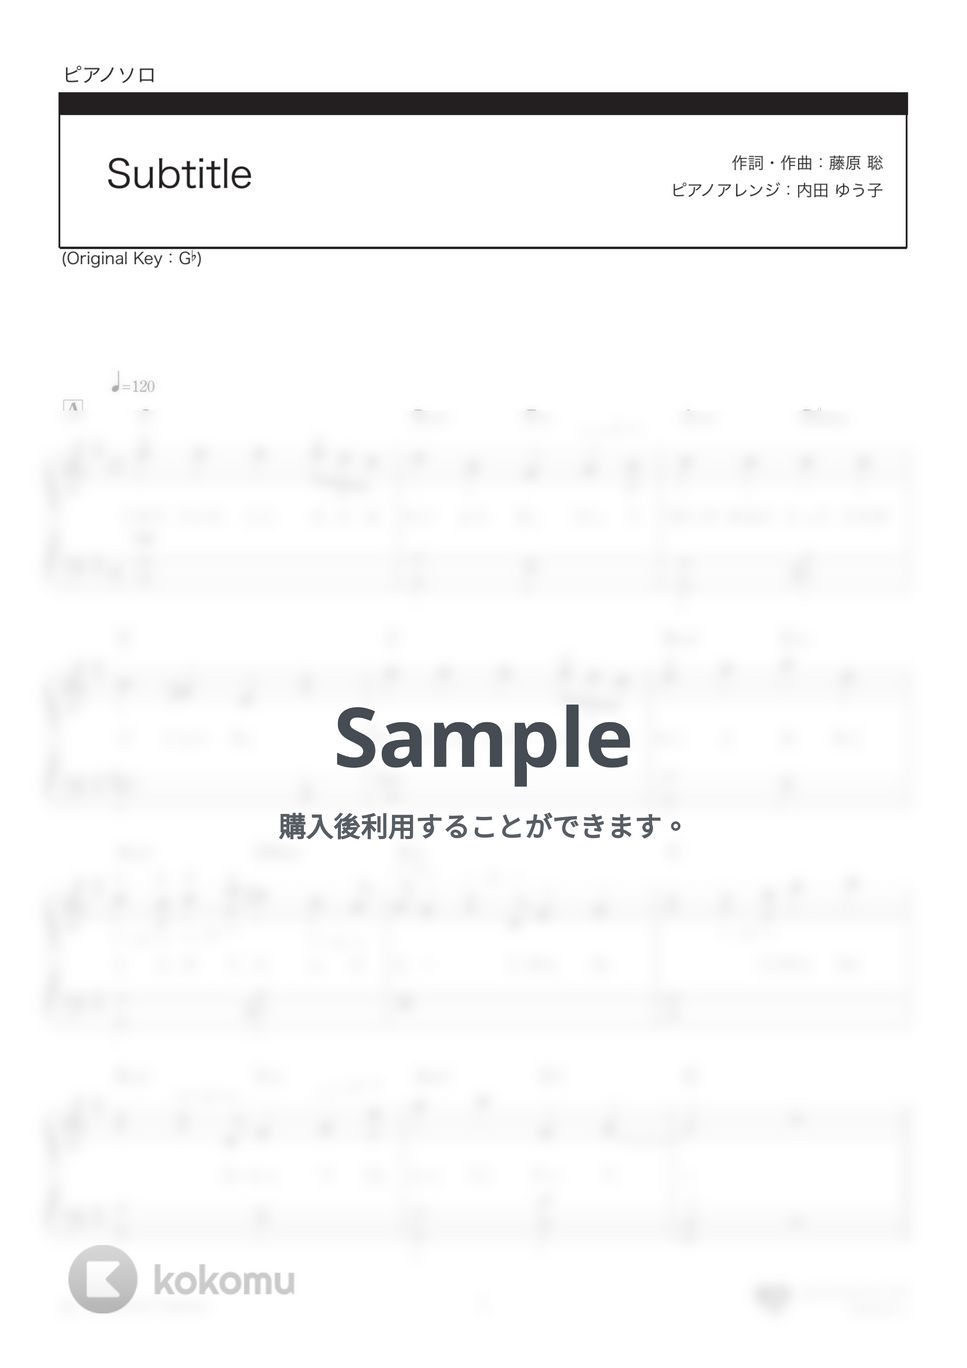 Official髭男dism - Subtitle (ト長調/TVドラマ『silent』主題歌) by 楽譜仕事人_内田ゆう子